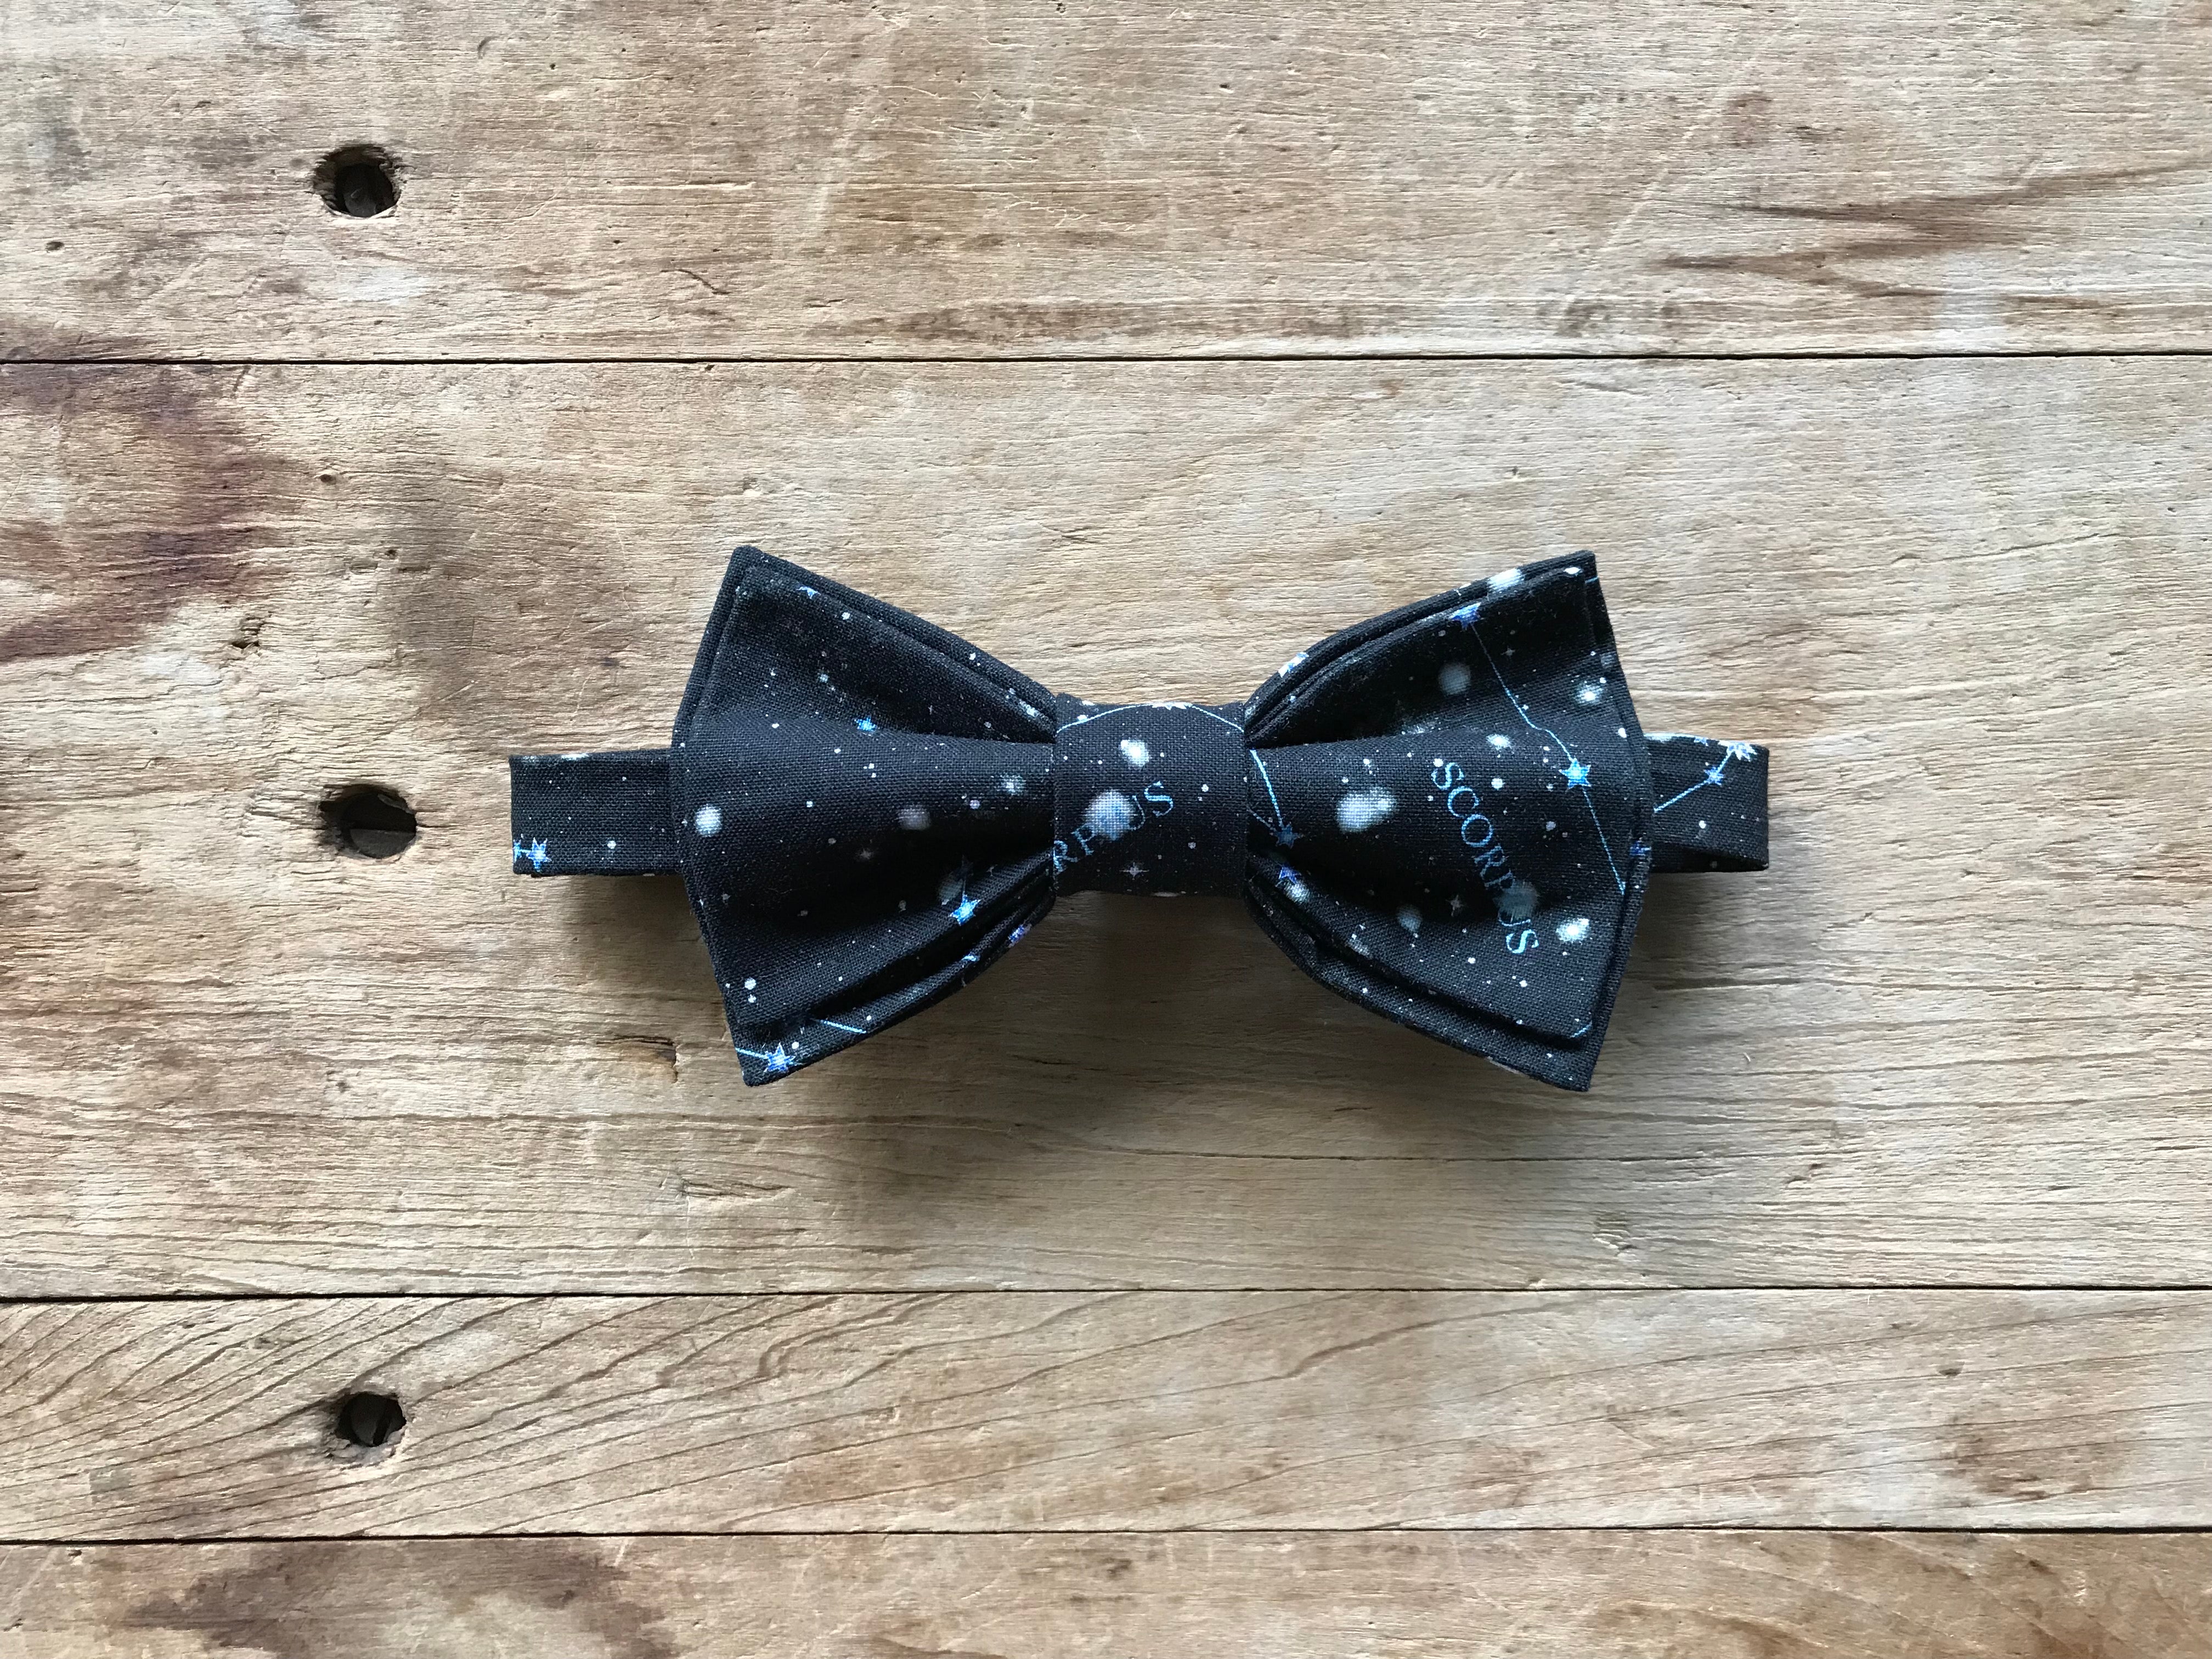 Adjustable Bow Tie — Black with Constellation Print